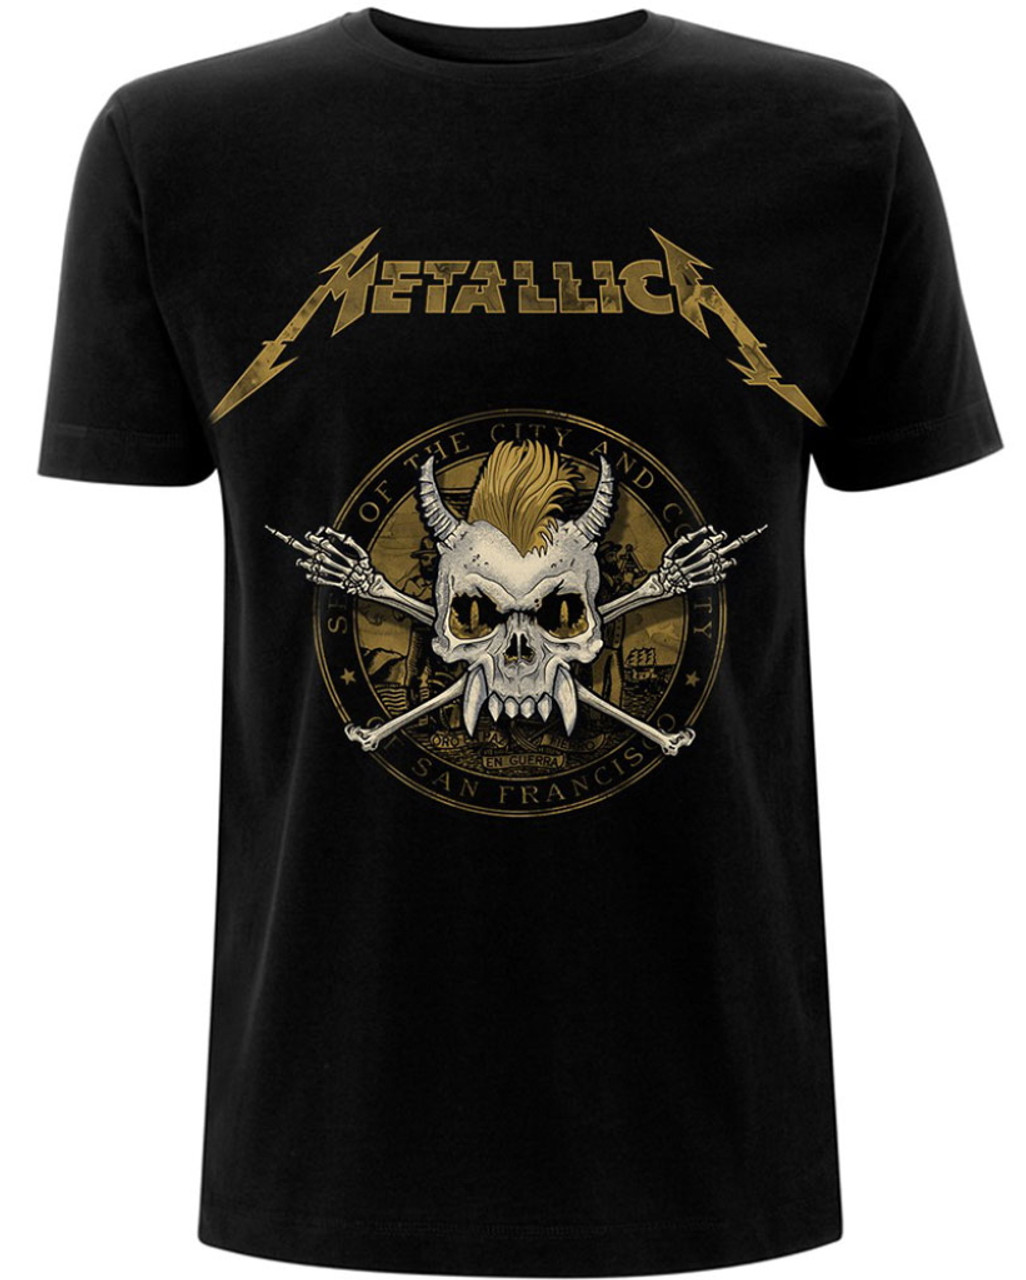 Metallica 'Scary Guy Seal' (Black) T-Shirt